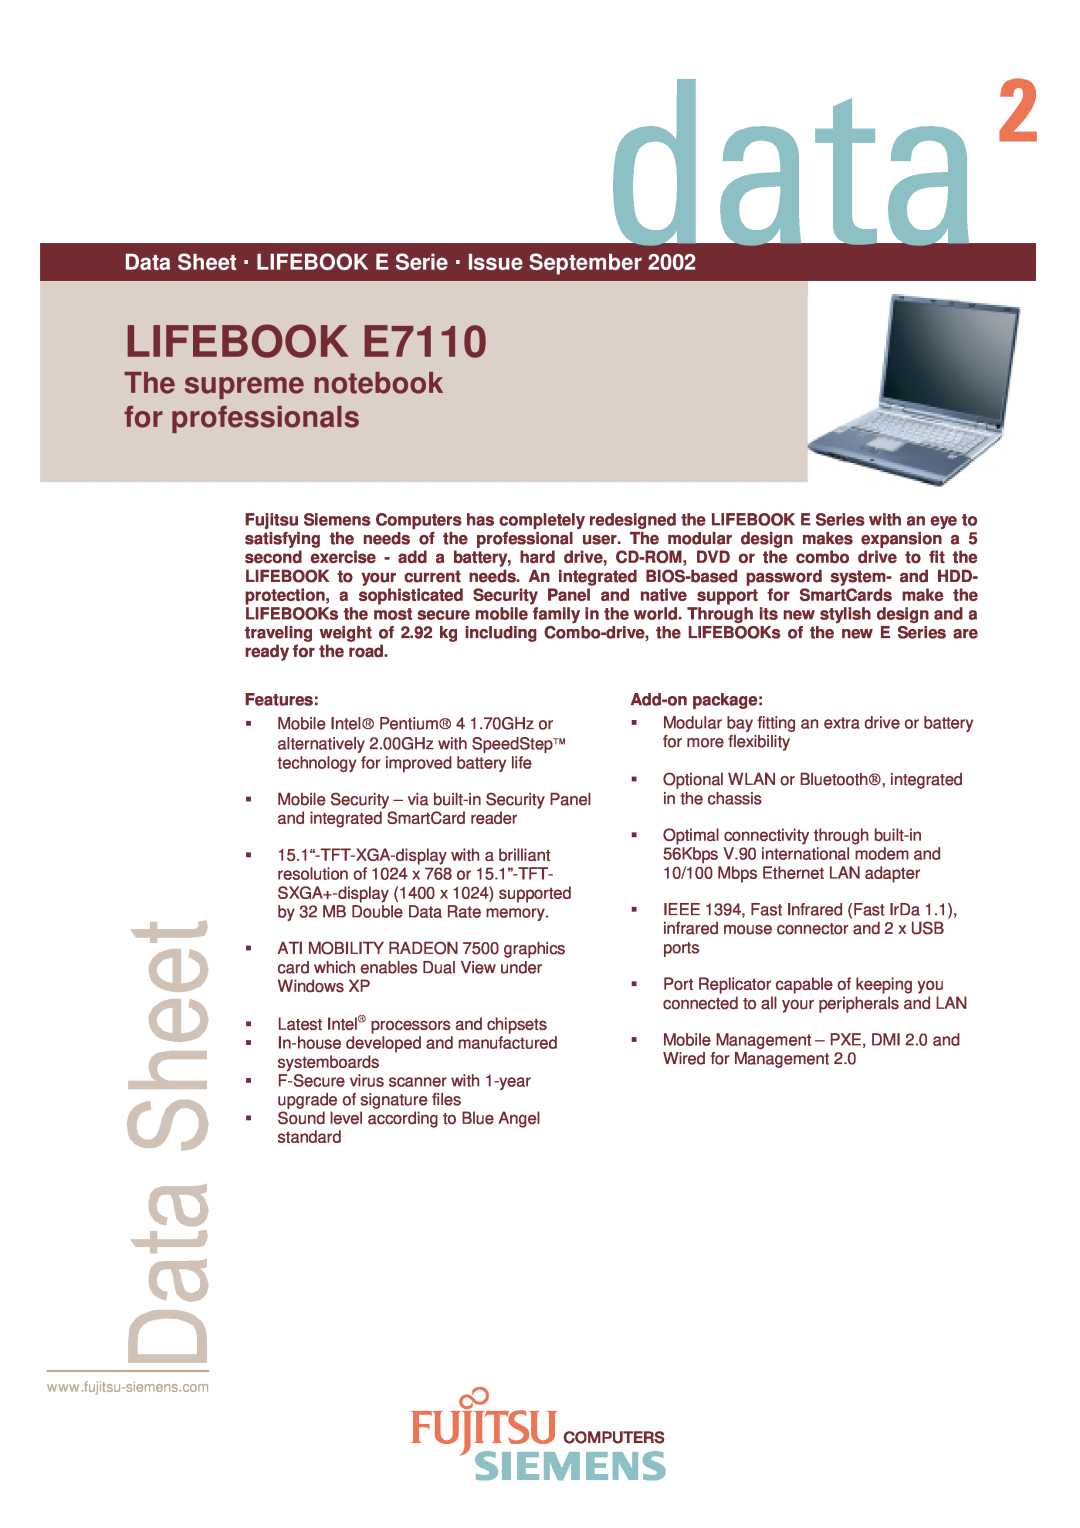 Fujitsu Siemens Computers manual LIFEBOOK E7110, The supreme notebook for professionals 